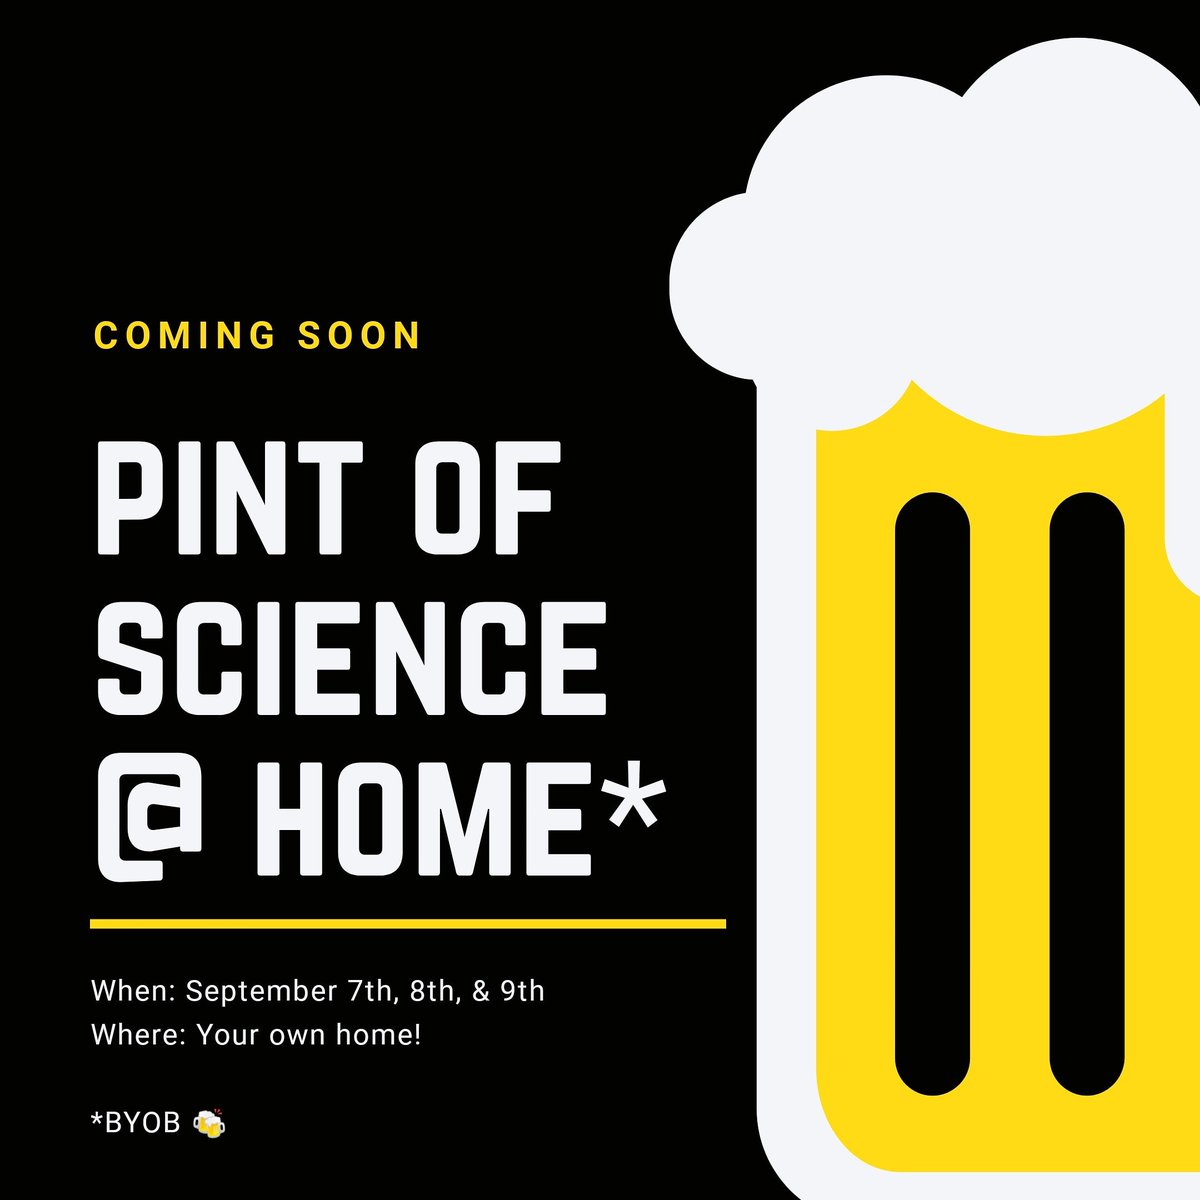 Pint of Science – C3SL